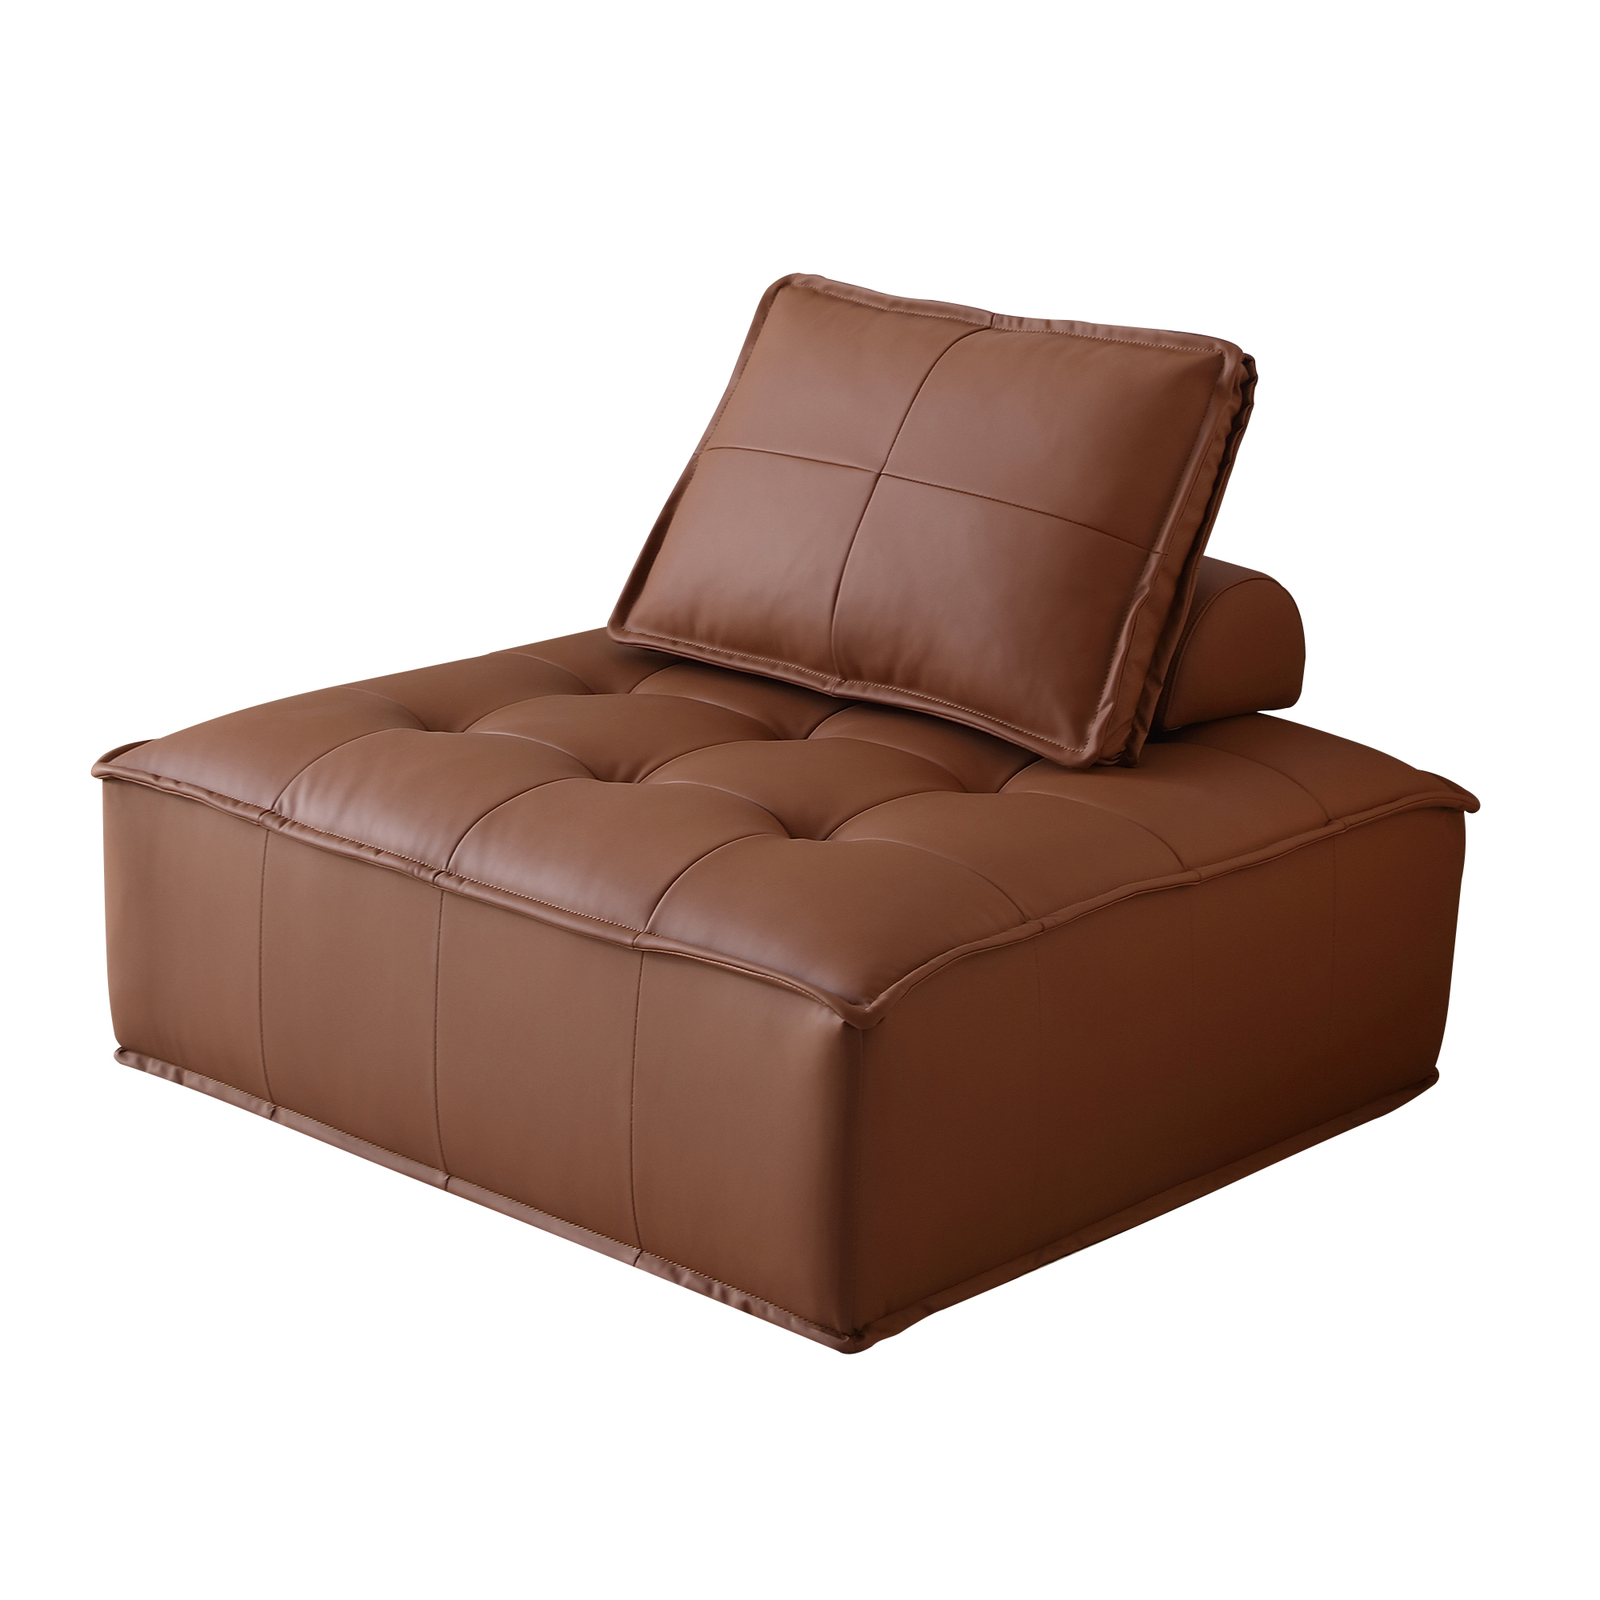 1pc Large Modular Sofa Lounge Chair Tofu Sofa Armless Seat PU Leather Couch Seat - Brown